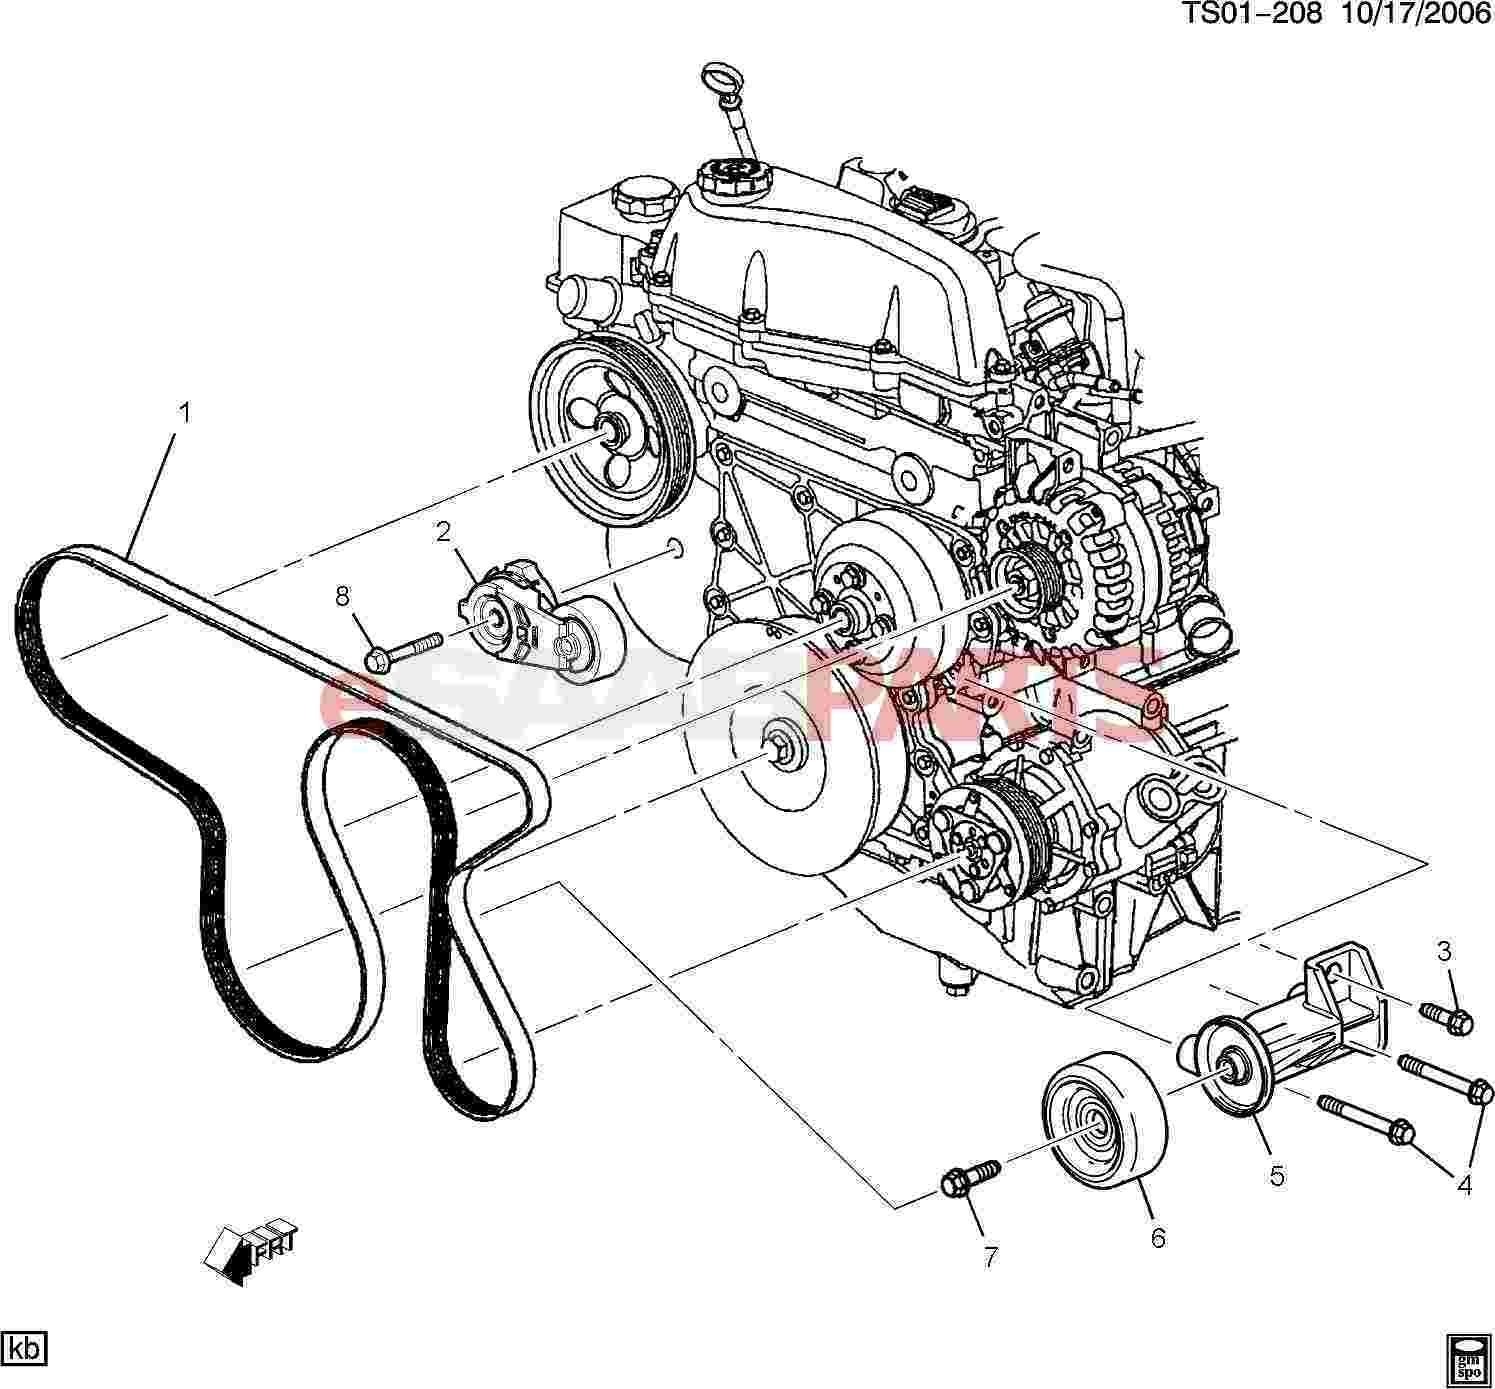 Chevy Trailblazer Engine Diagram 4 2l Engine Diagram Wiring Diagram for You Of Chevy Trailblazer Engine Diagram